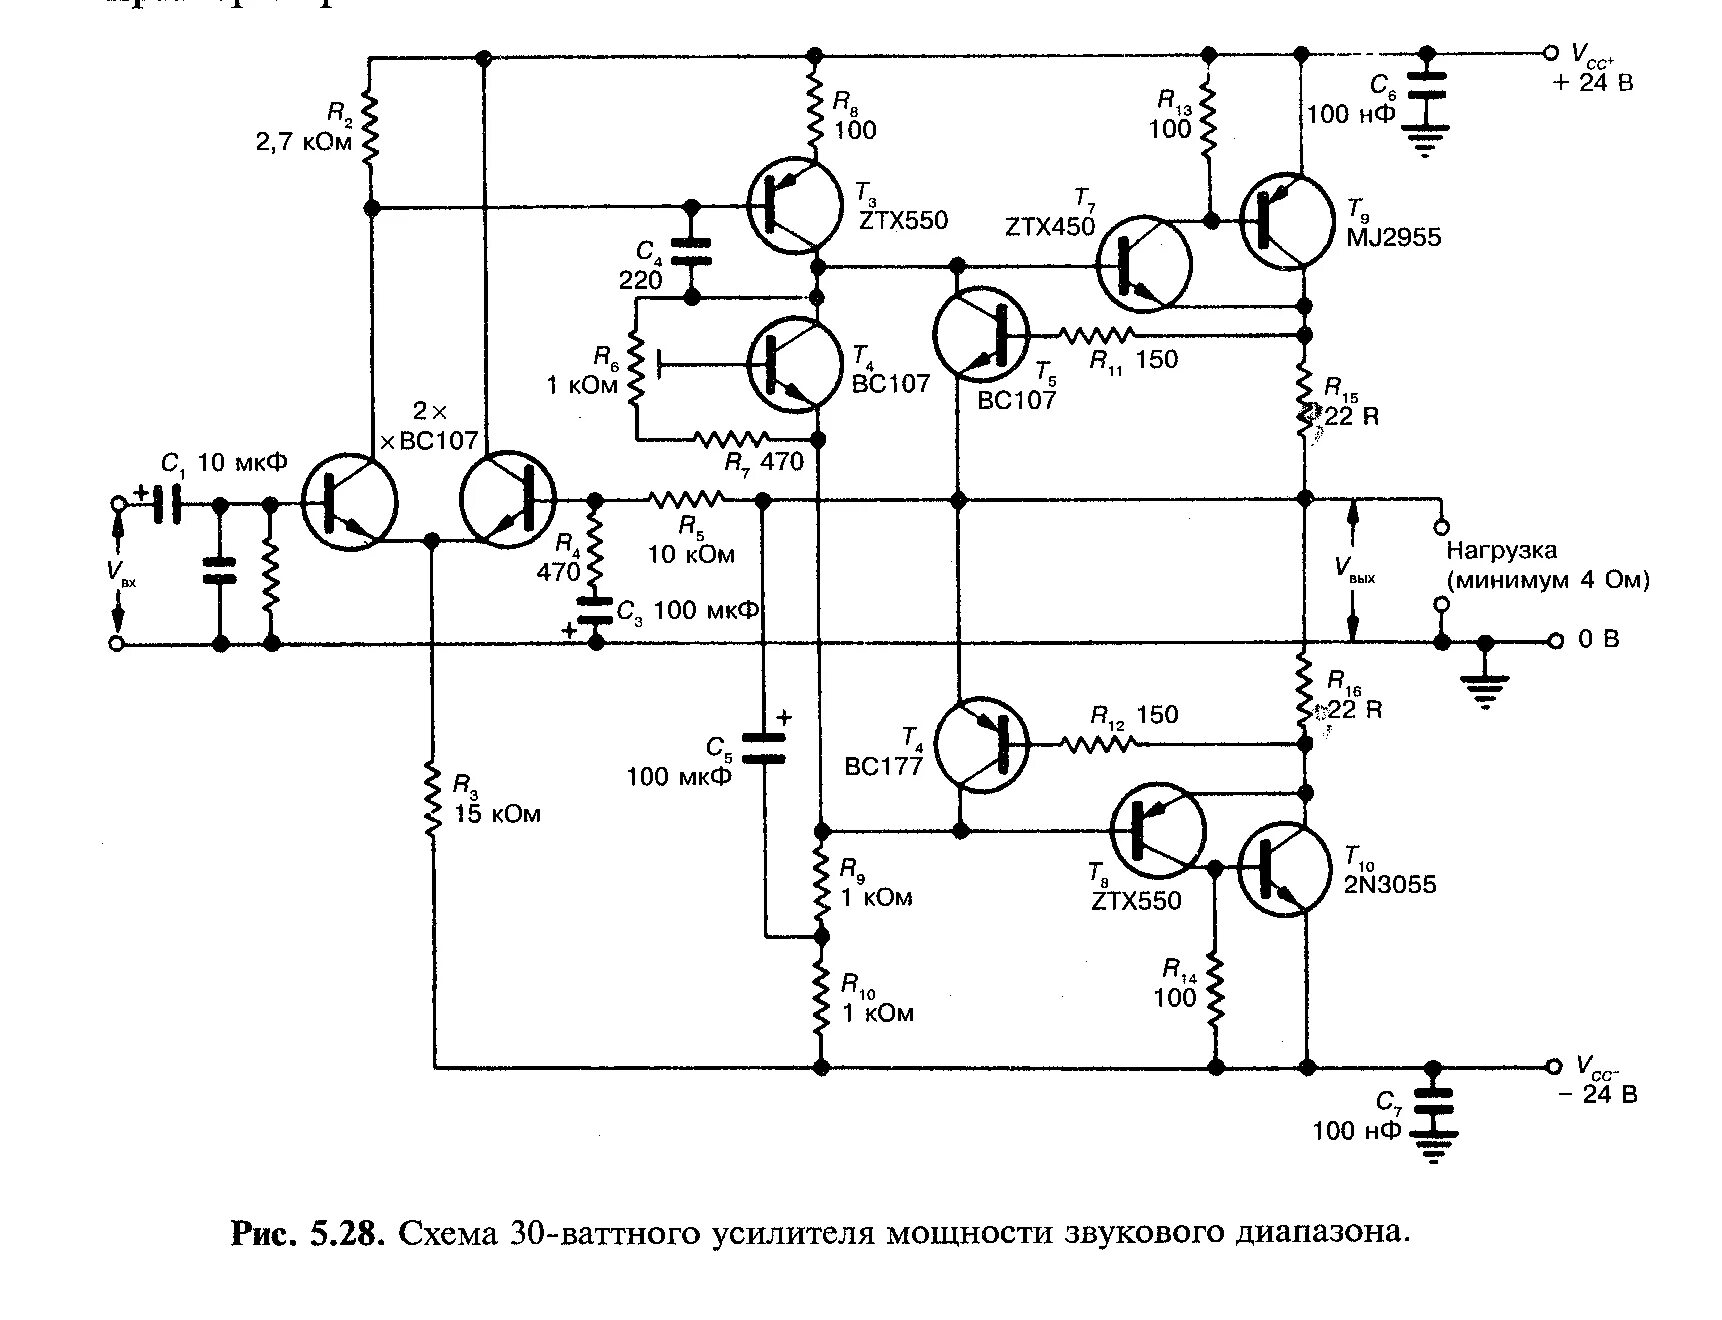 Каскад унч. Схема УМЗЧ на кт808. Схема усилителя мощности на транзисторах кт805. Схема усилителя на кт808а транзисторах. Схема усилителя на транзисторах кт802а.